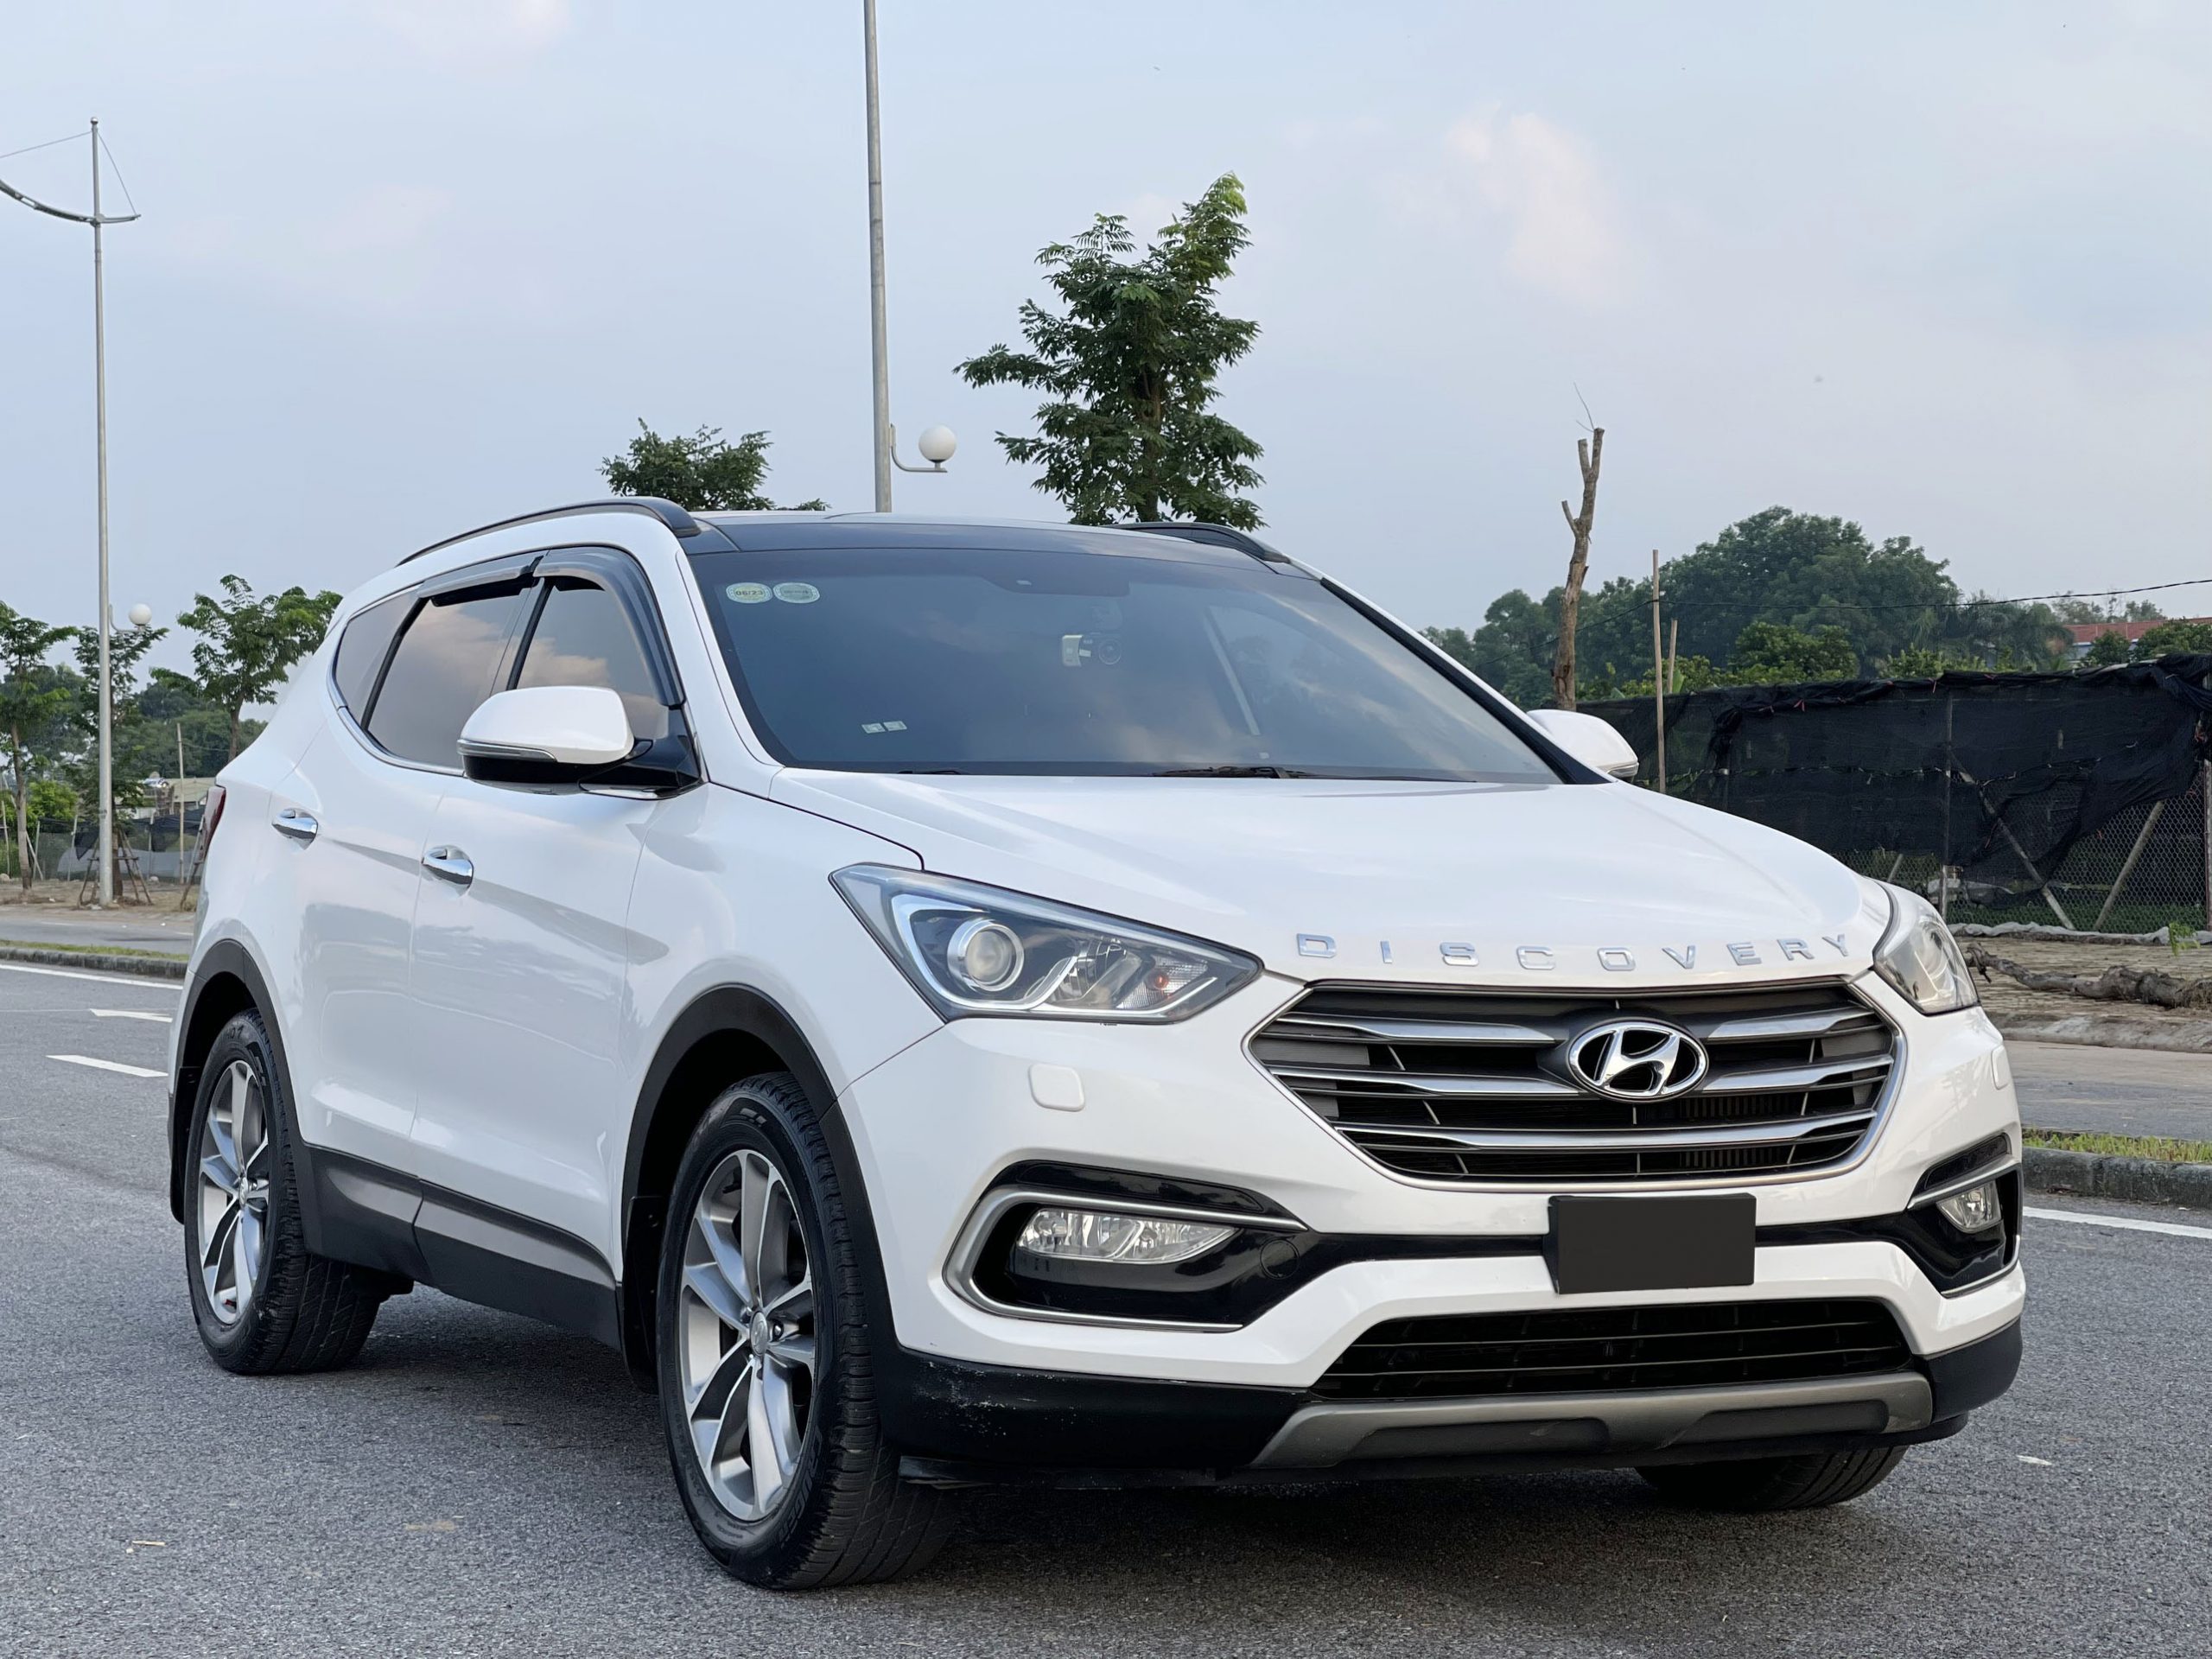 Hyundai SantaFe 2018 22L Dầu thường